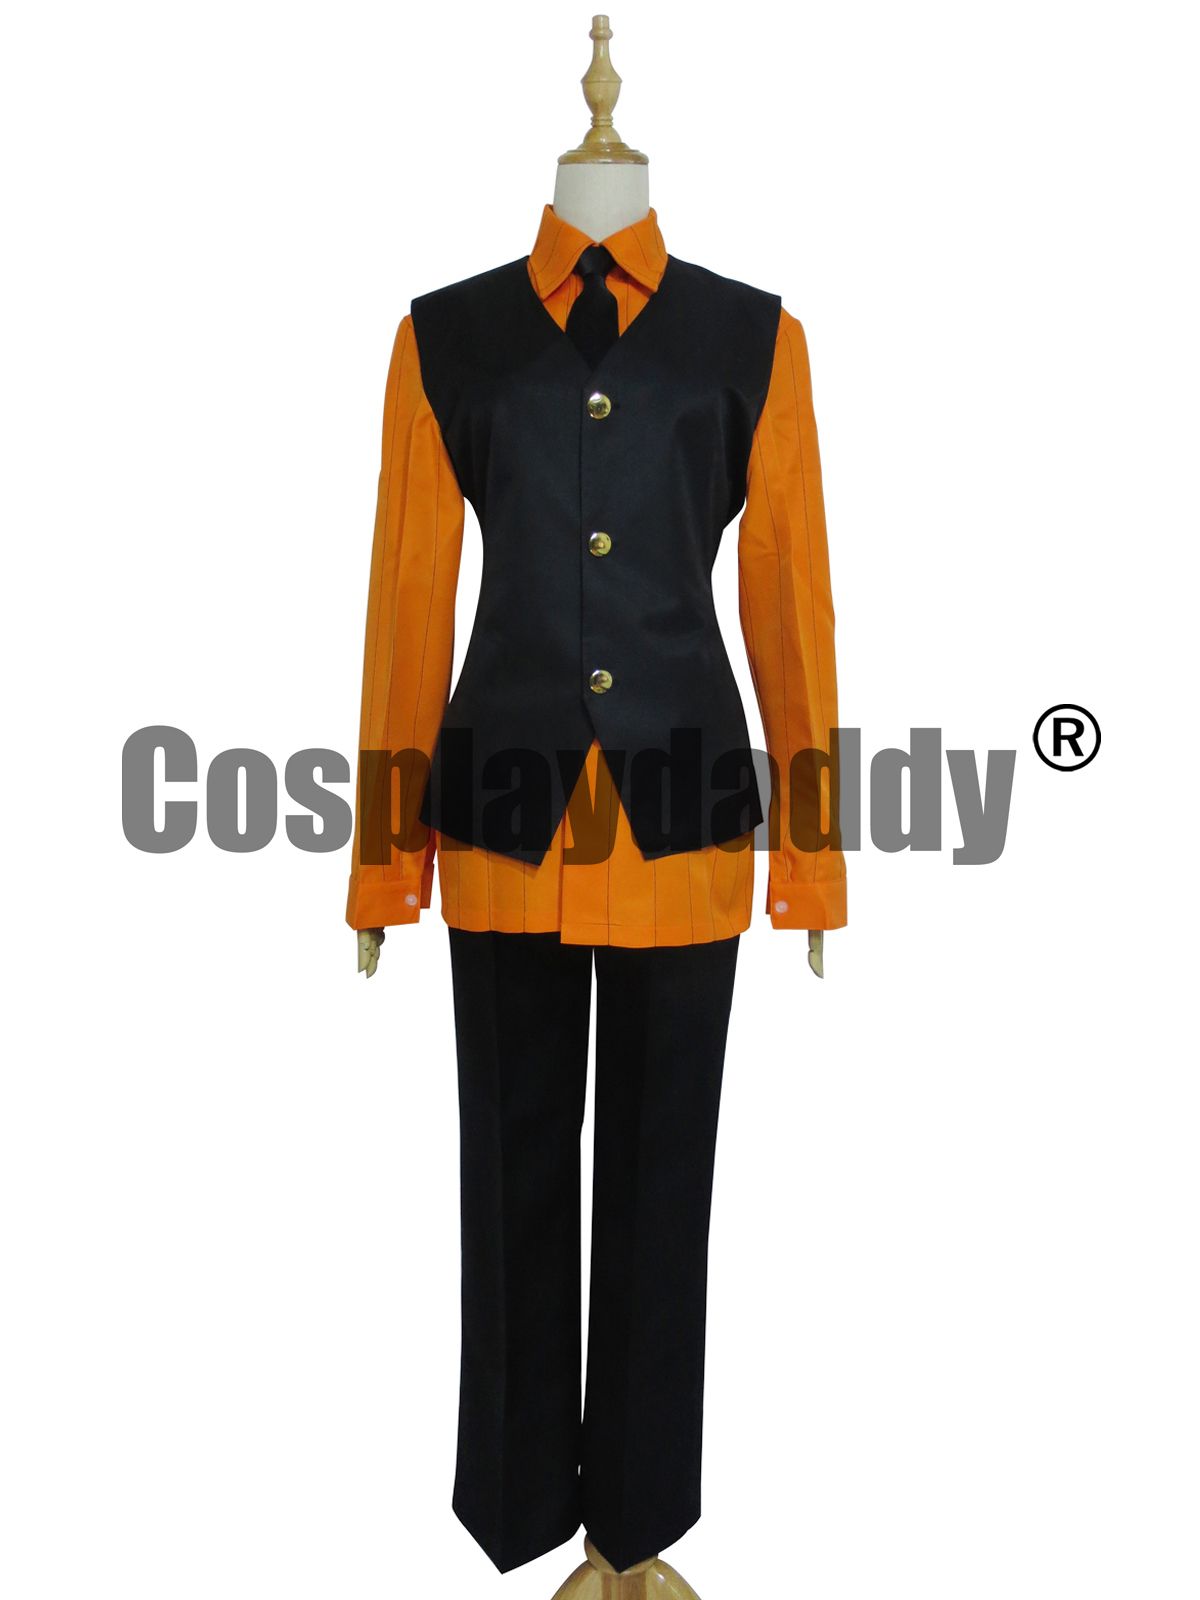 One Piece Sanji Cosplay Black Vest Stripes Orange Shirt Costume Outfit Clothing